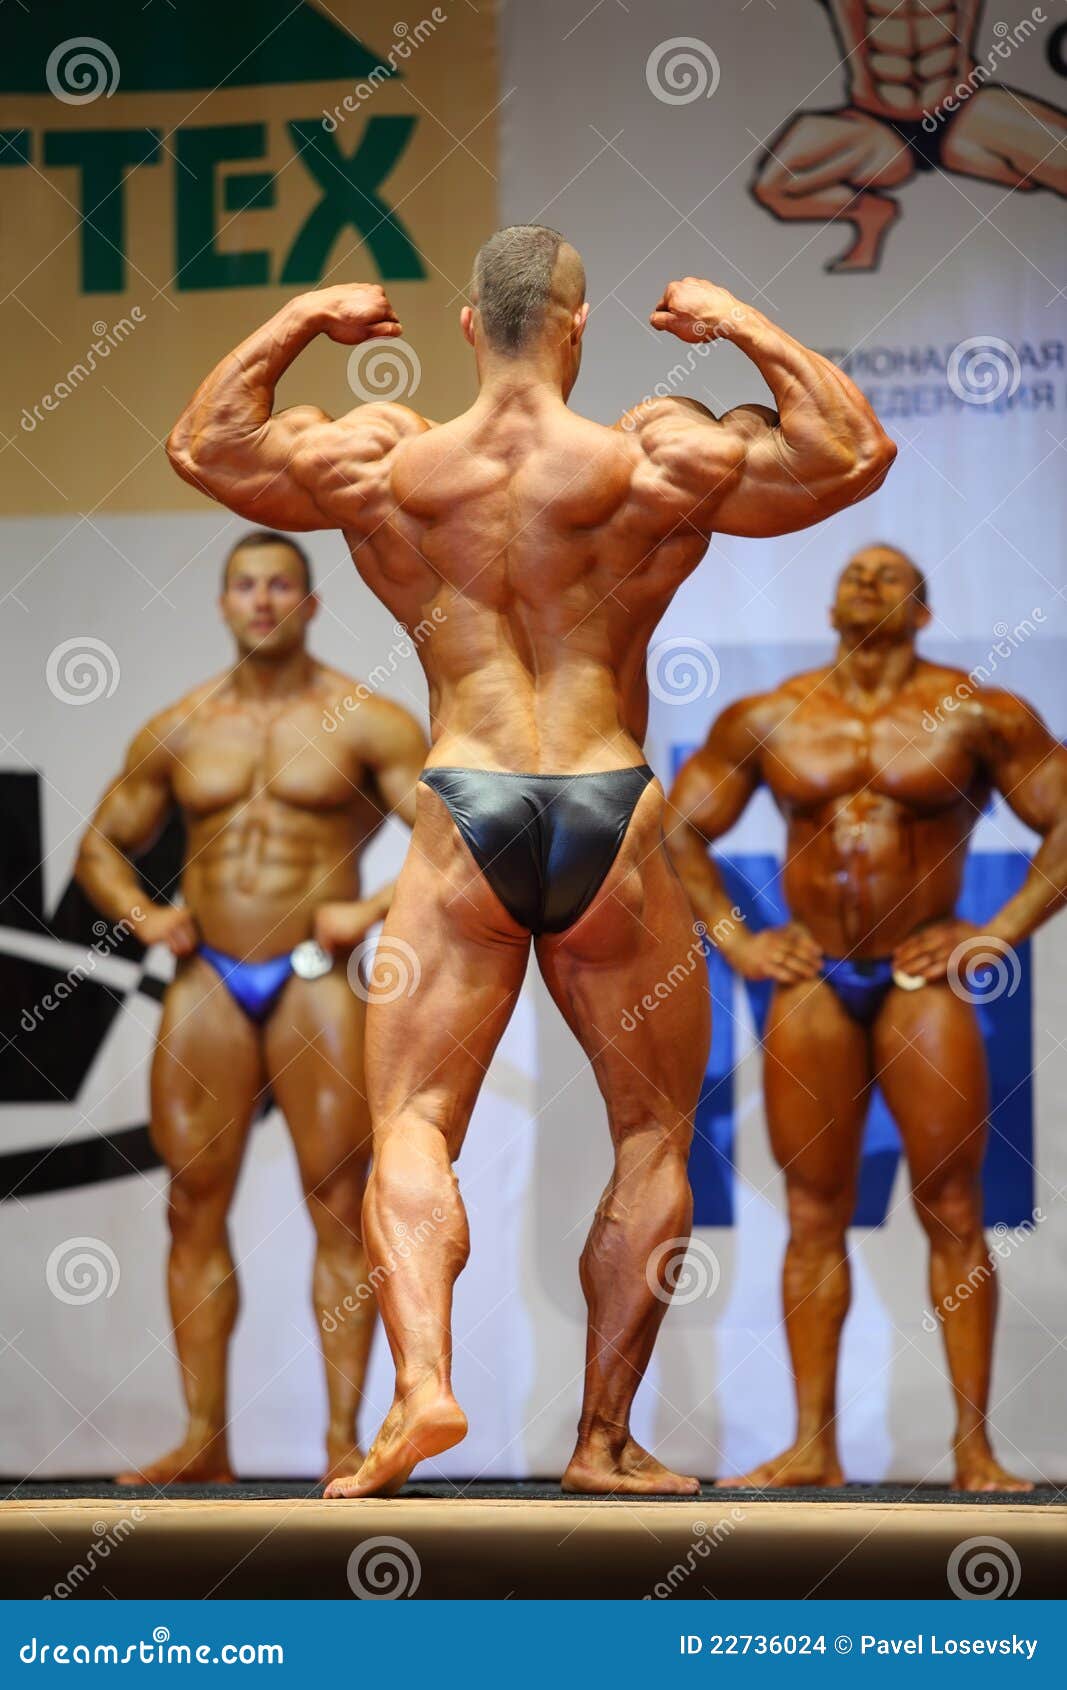 https://thumbs.dreamstime.com/z/back-bodybuilder-open-cup-bodybuilding-22736024.jpg